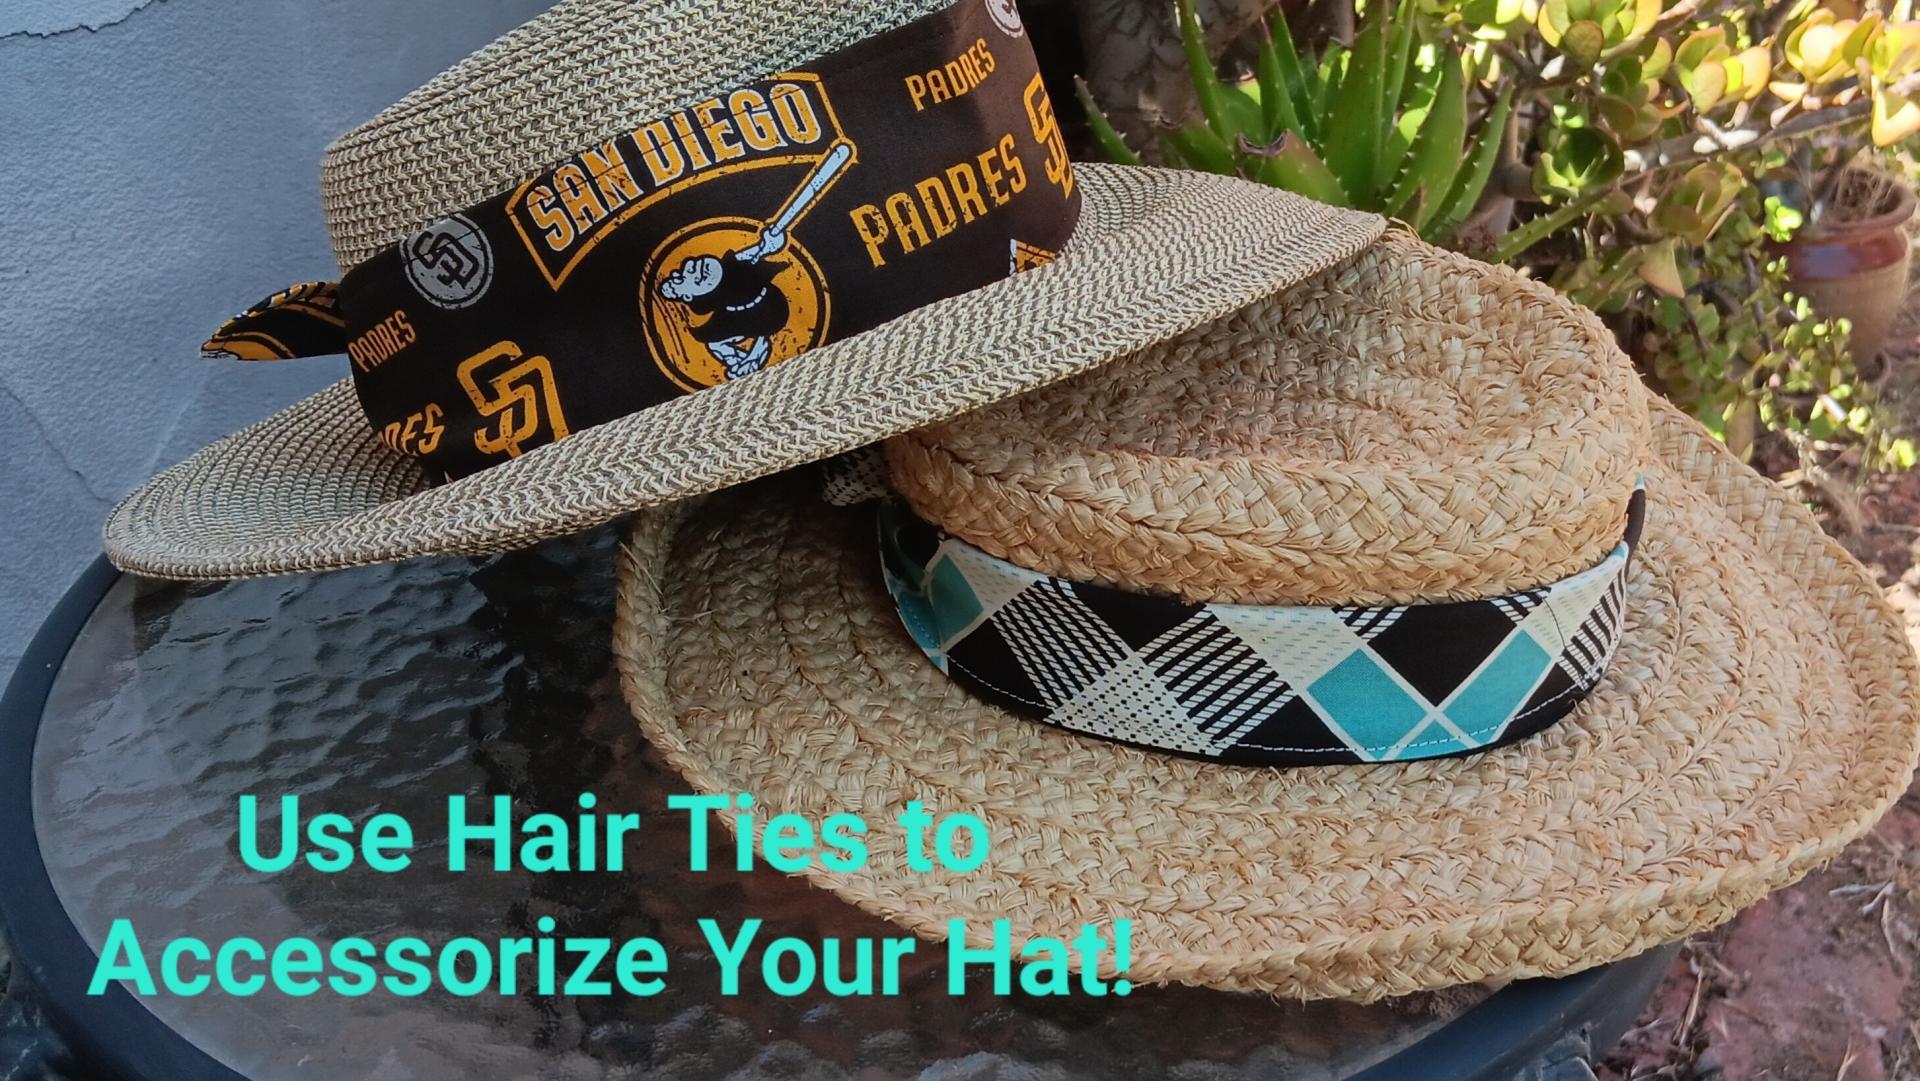 3” Wide Blue Headbands, self tie, hair wrap, pin up style, hair tie, retro tyle, rockabilly, choose print